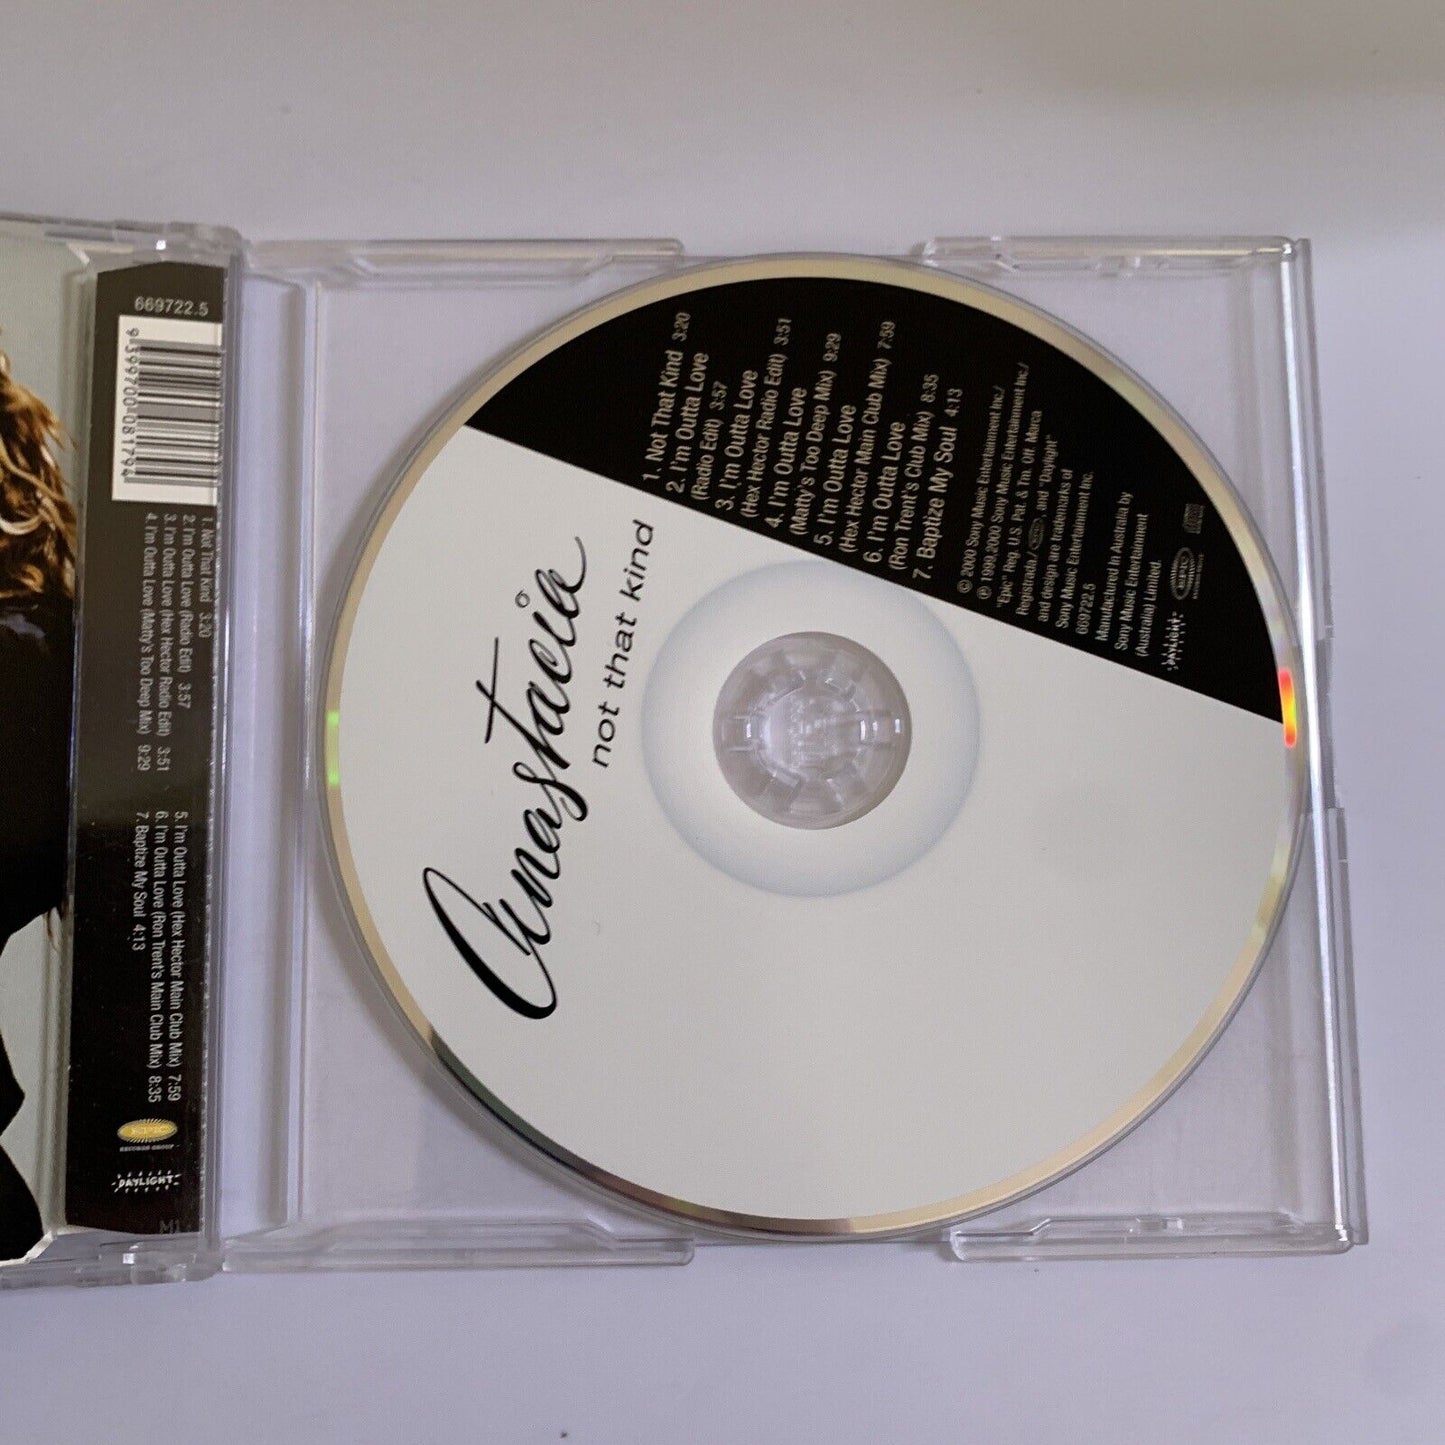 Anastacia – Not That Kind (CD, 2000) Single